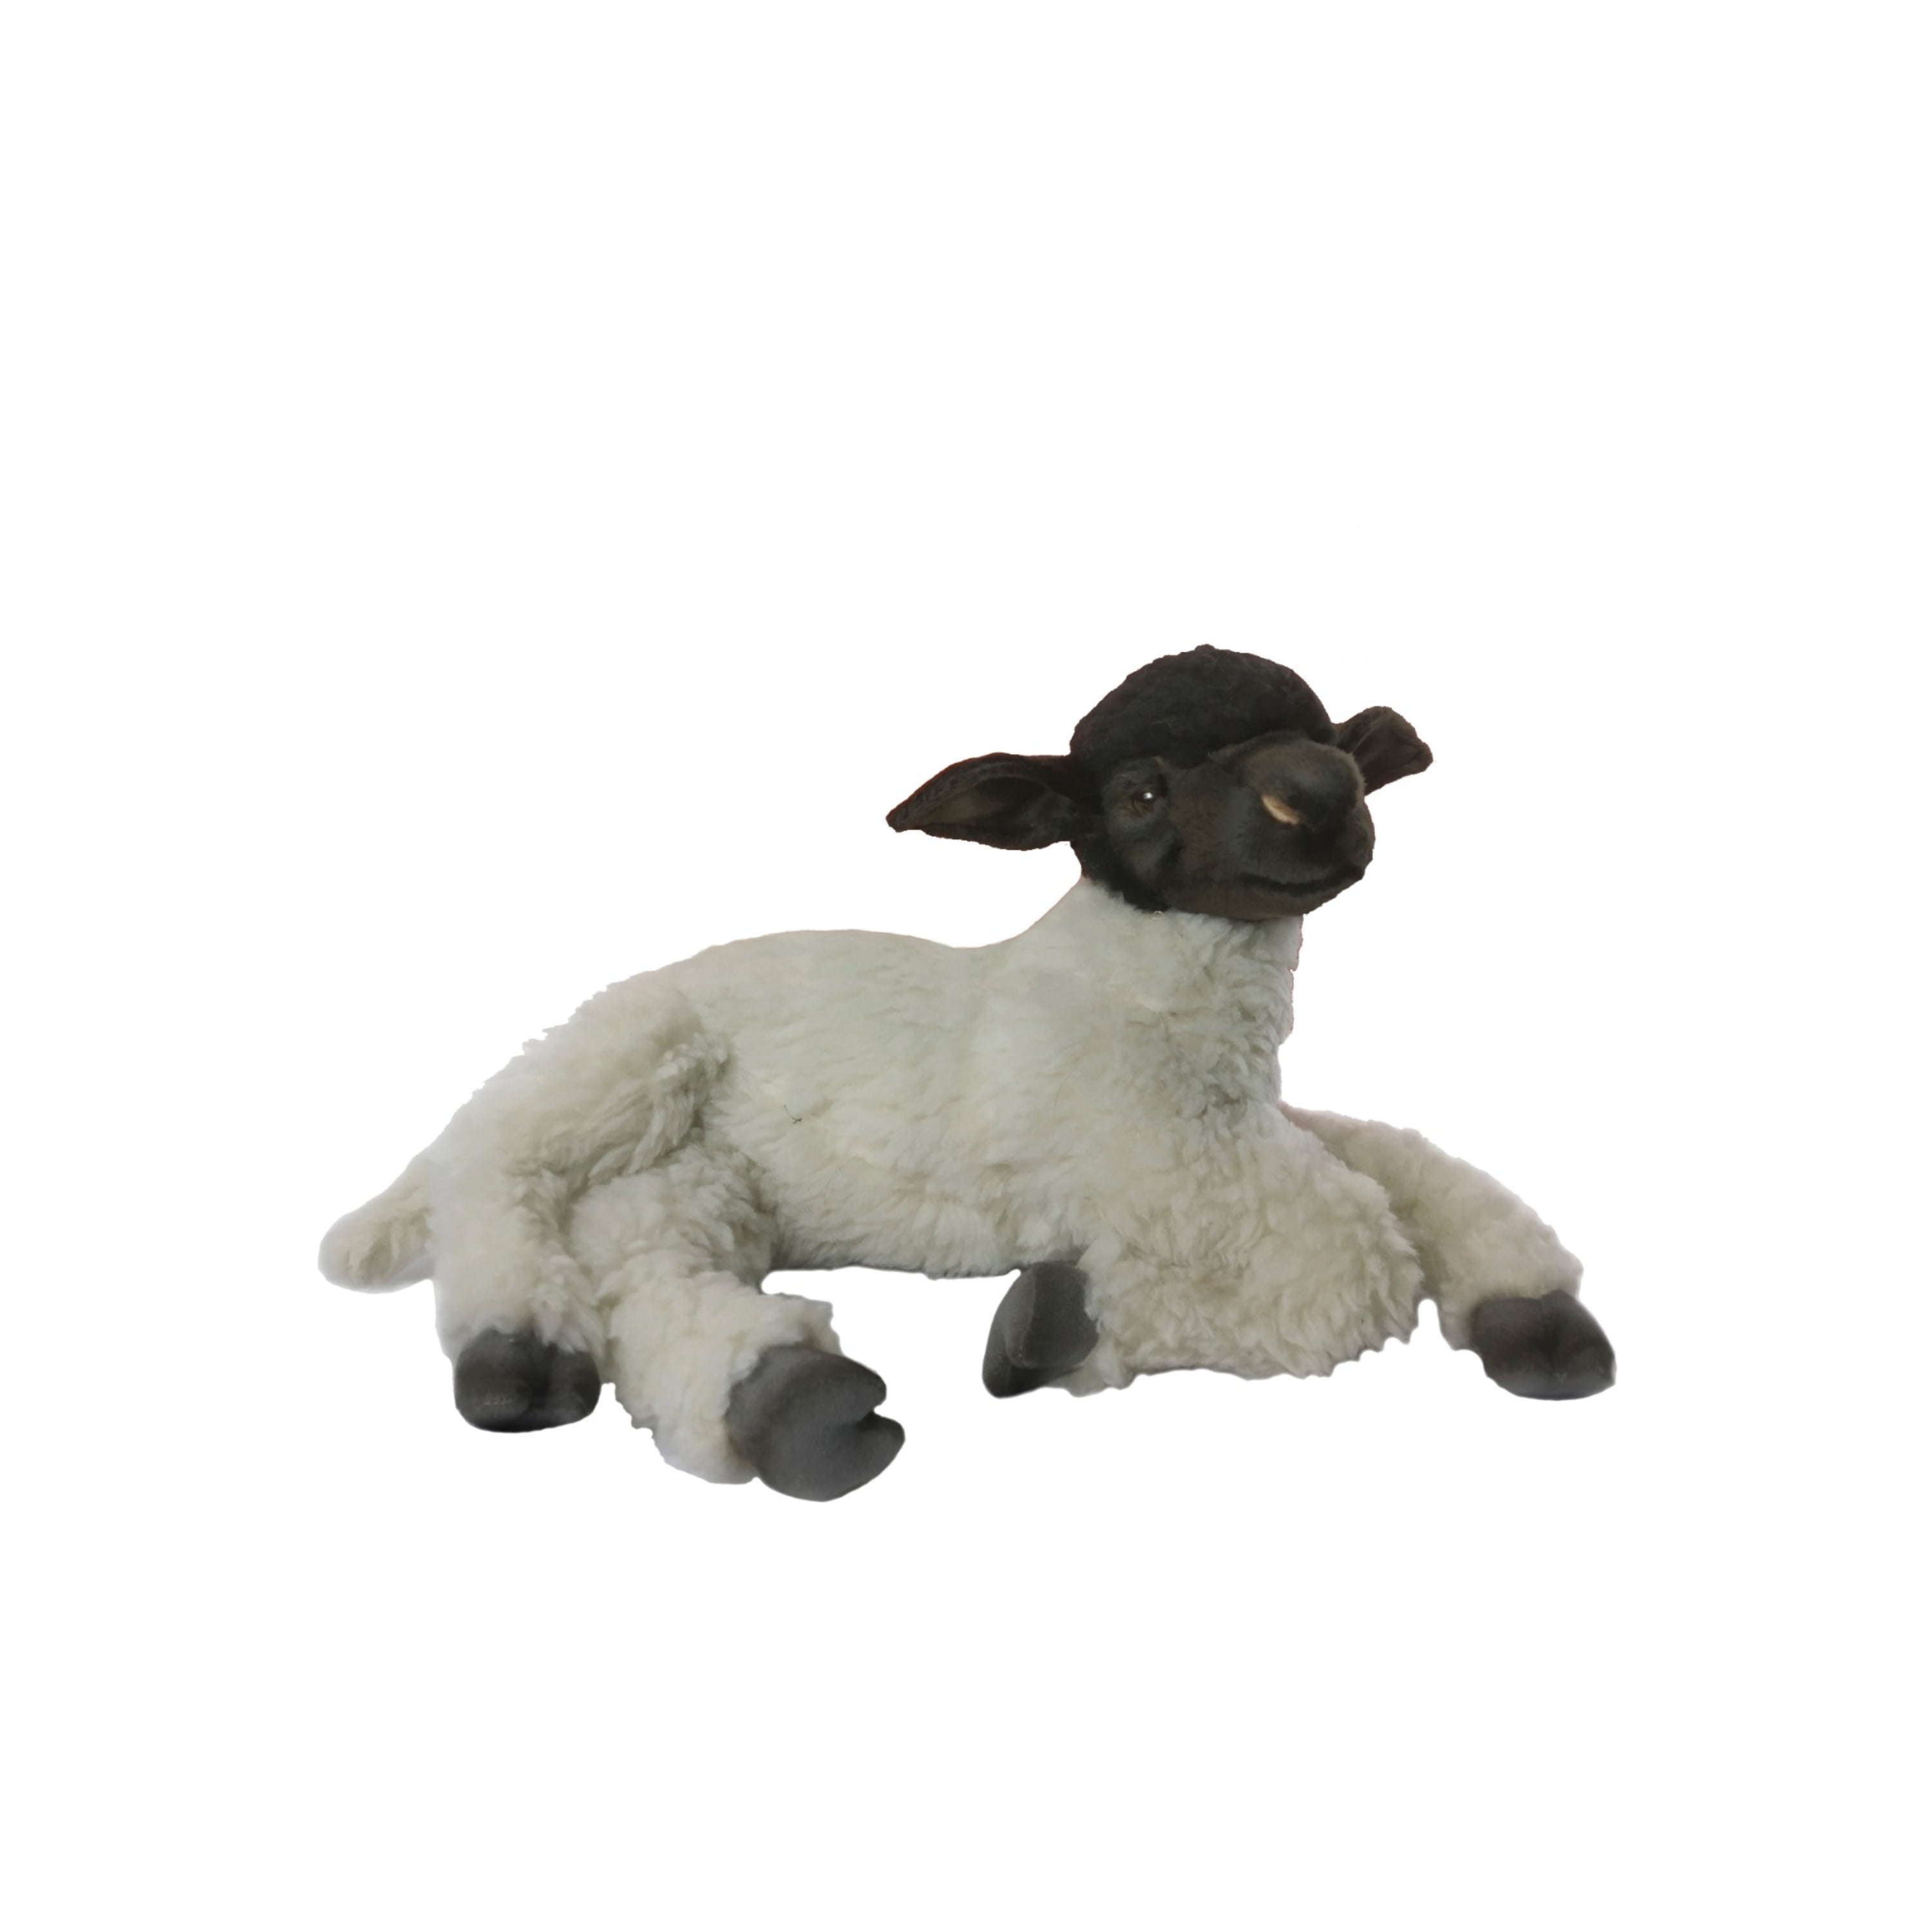 Black Sheep Plush Toy 14" by Hansa 